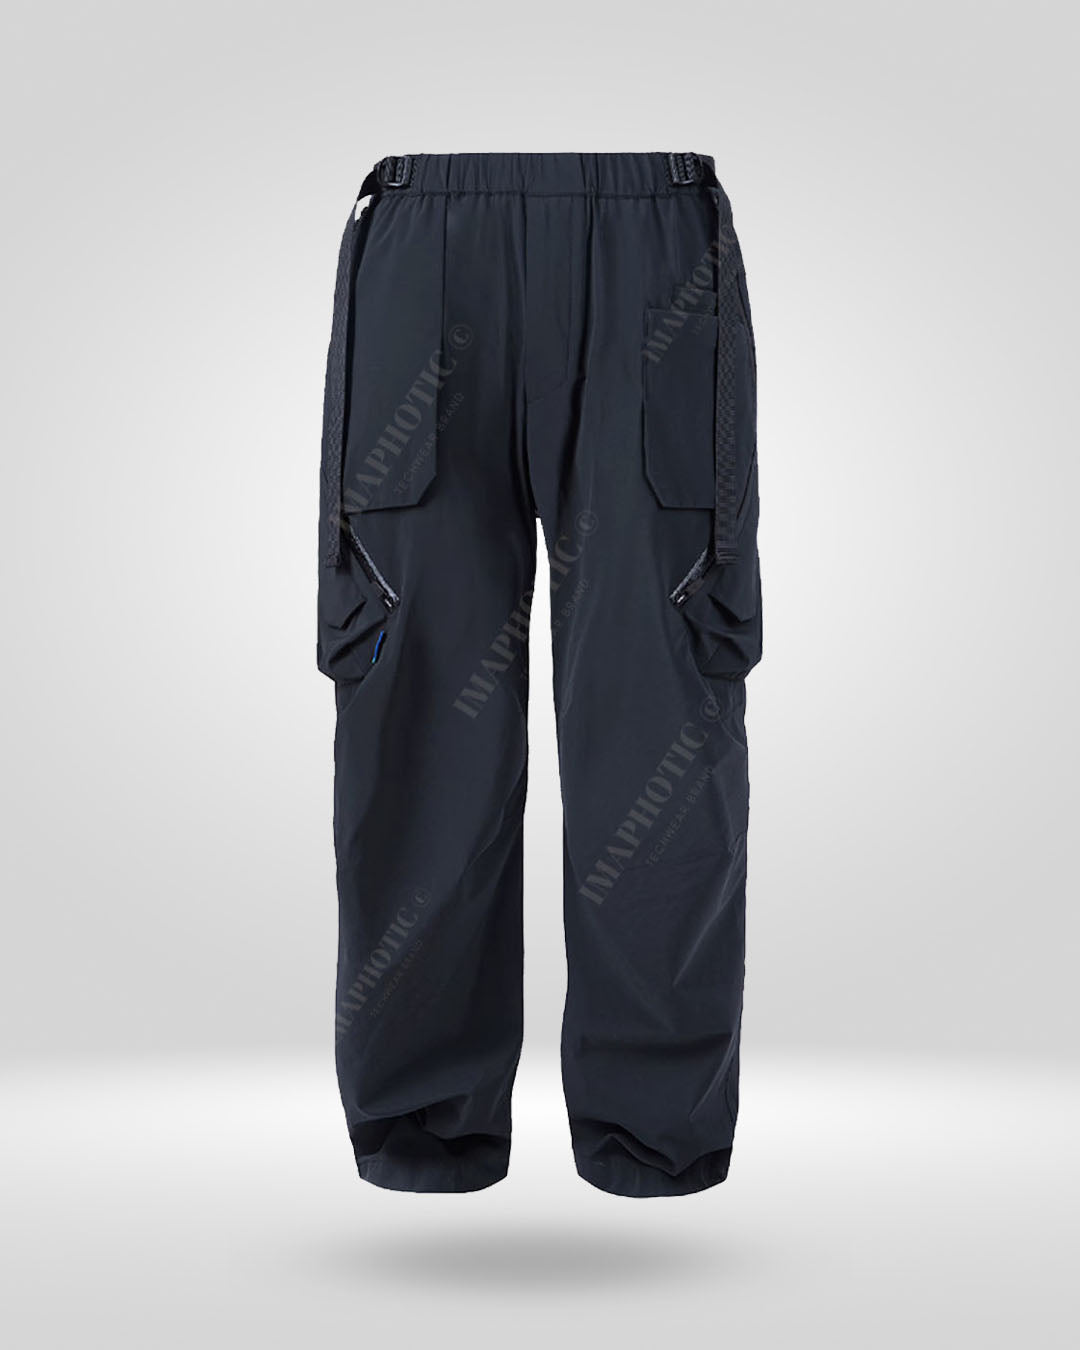 Men's Tactical Loose Fit Waterproof Pants - Outdoor Ready